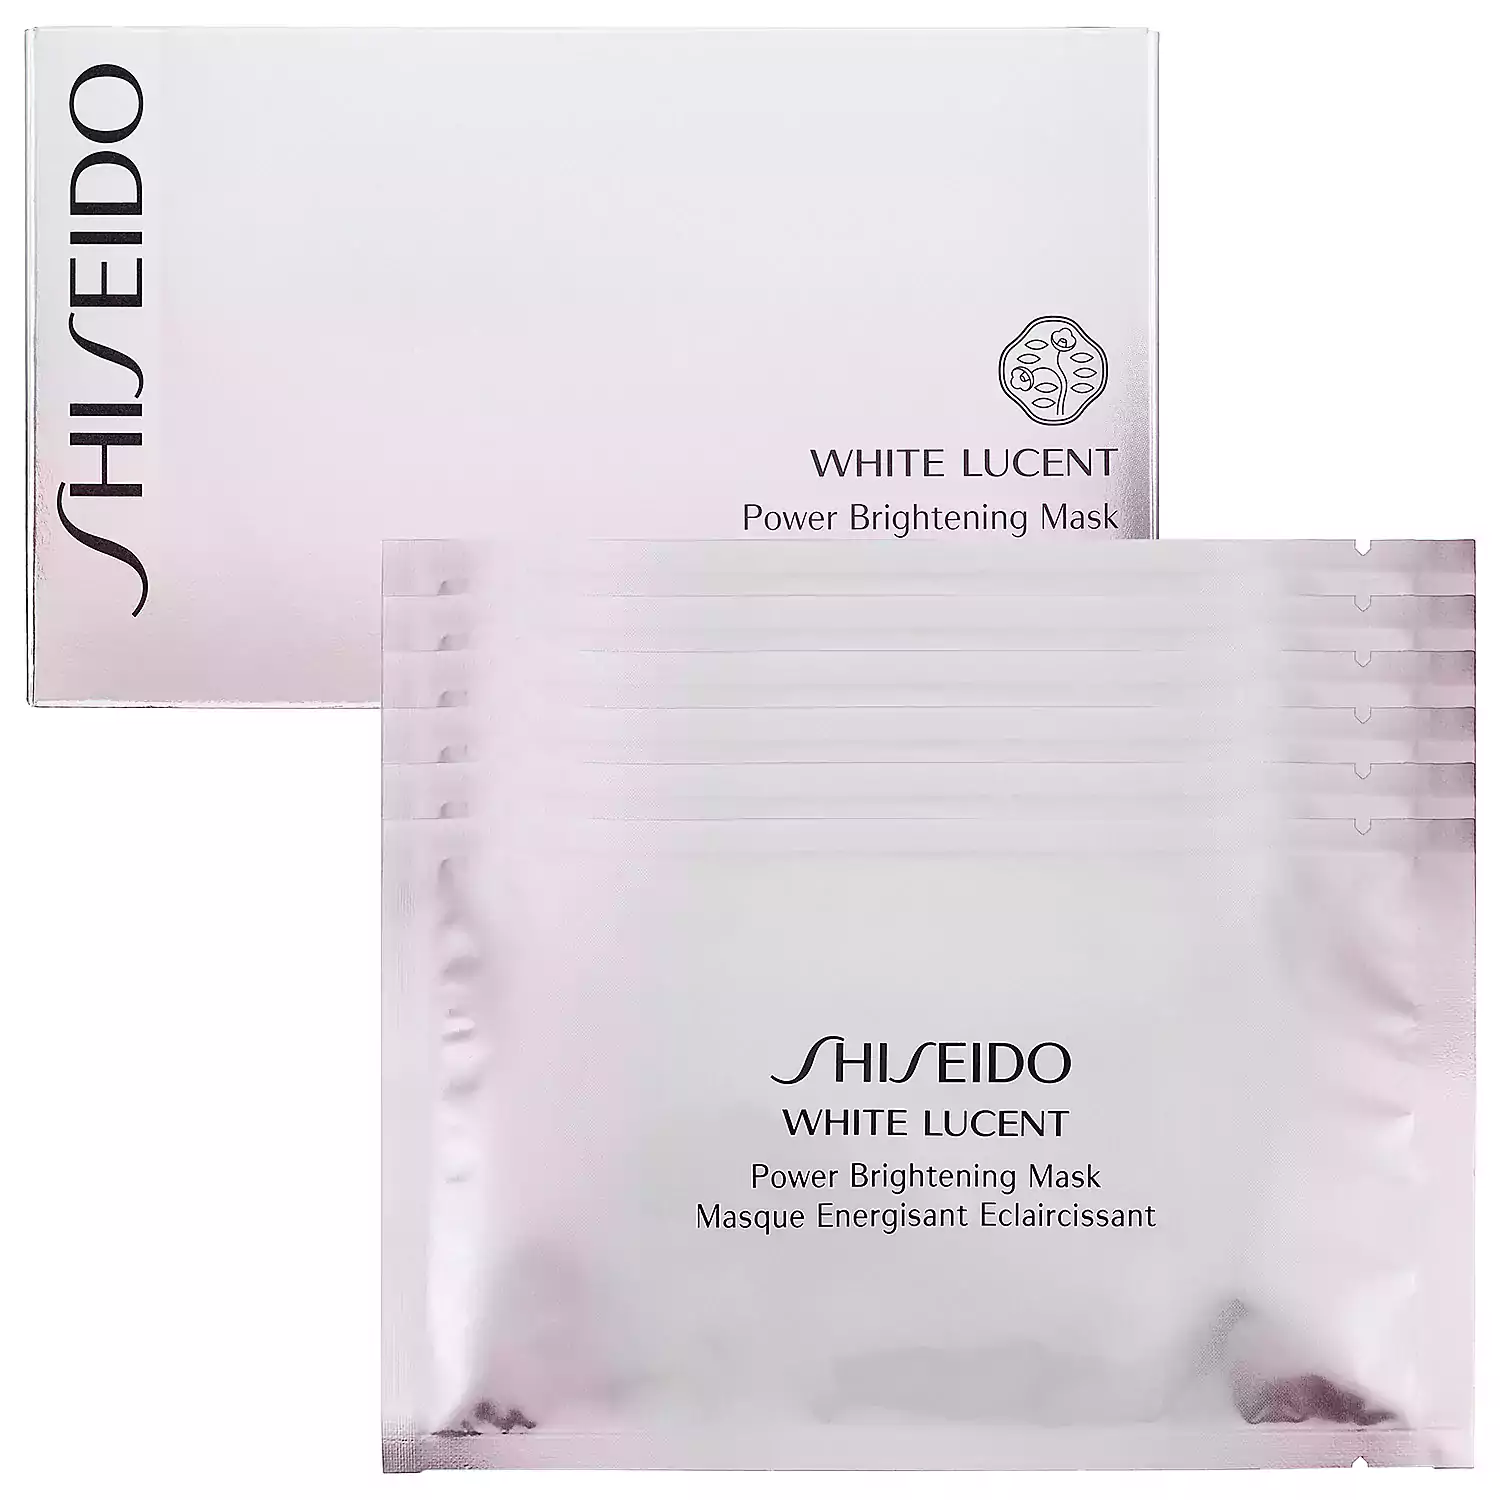 Kem Dưỡng Shiseido Men Skin Empowering Cream 50ml  - LAMOON.VN